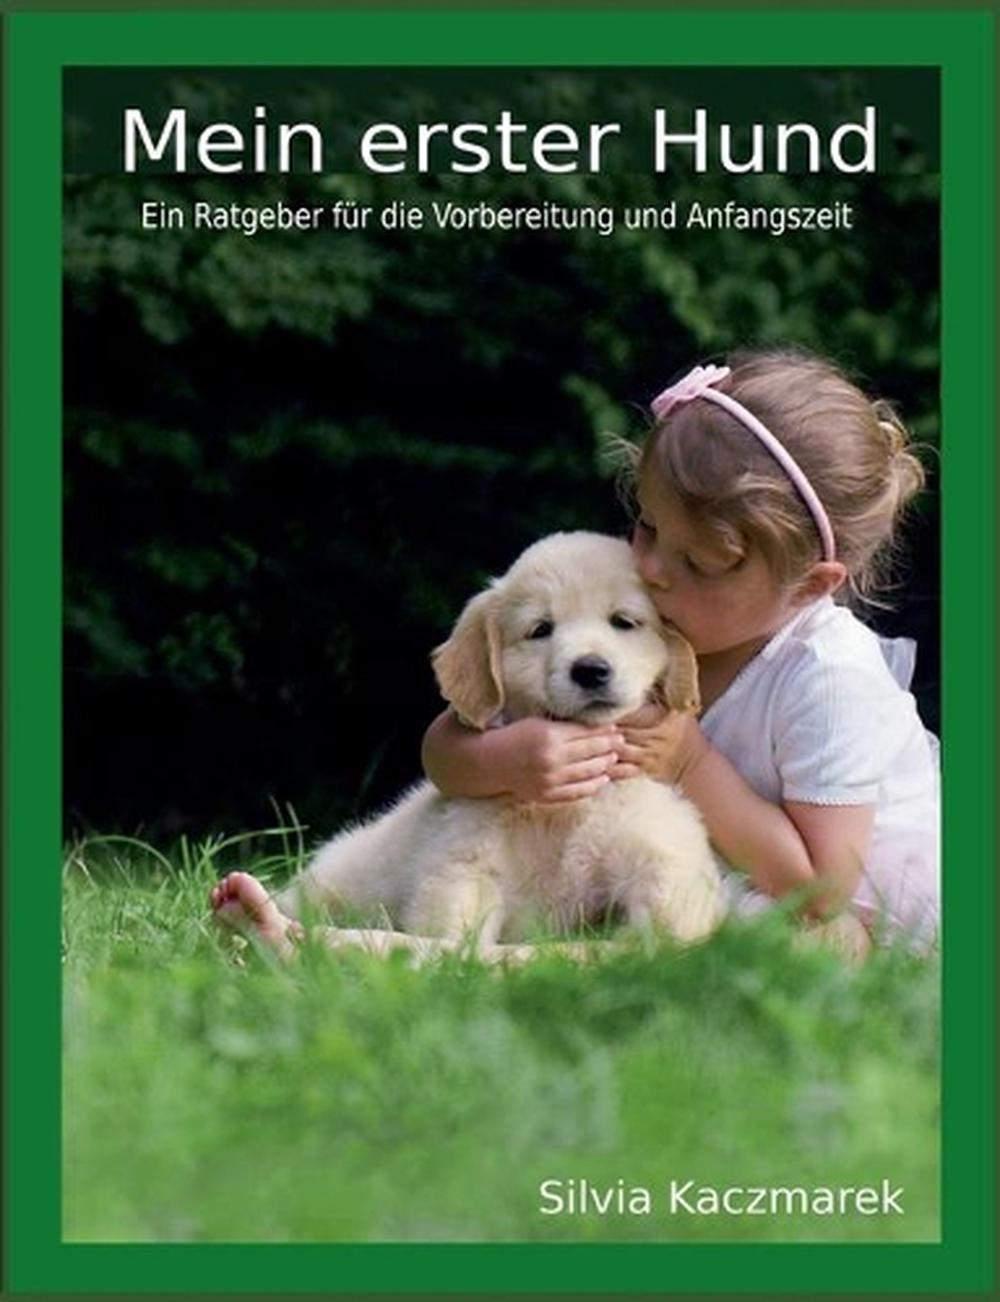 Mein erster Hund by Silvia Kaczmarek (German) Paperback Book Free